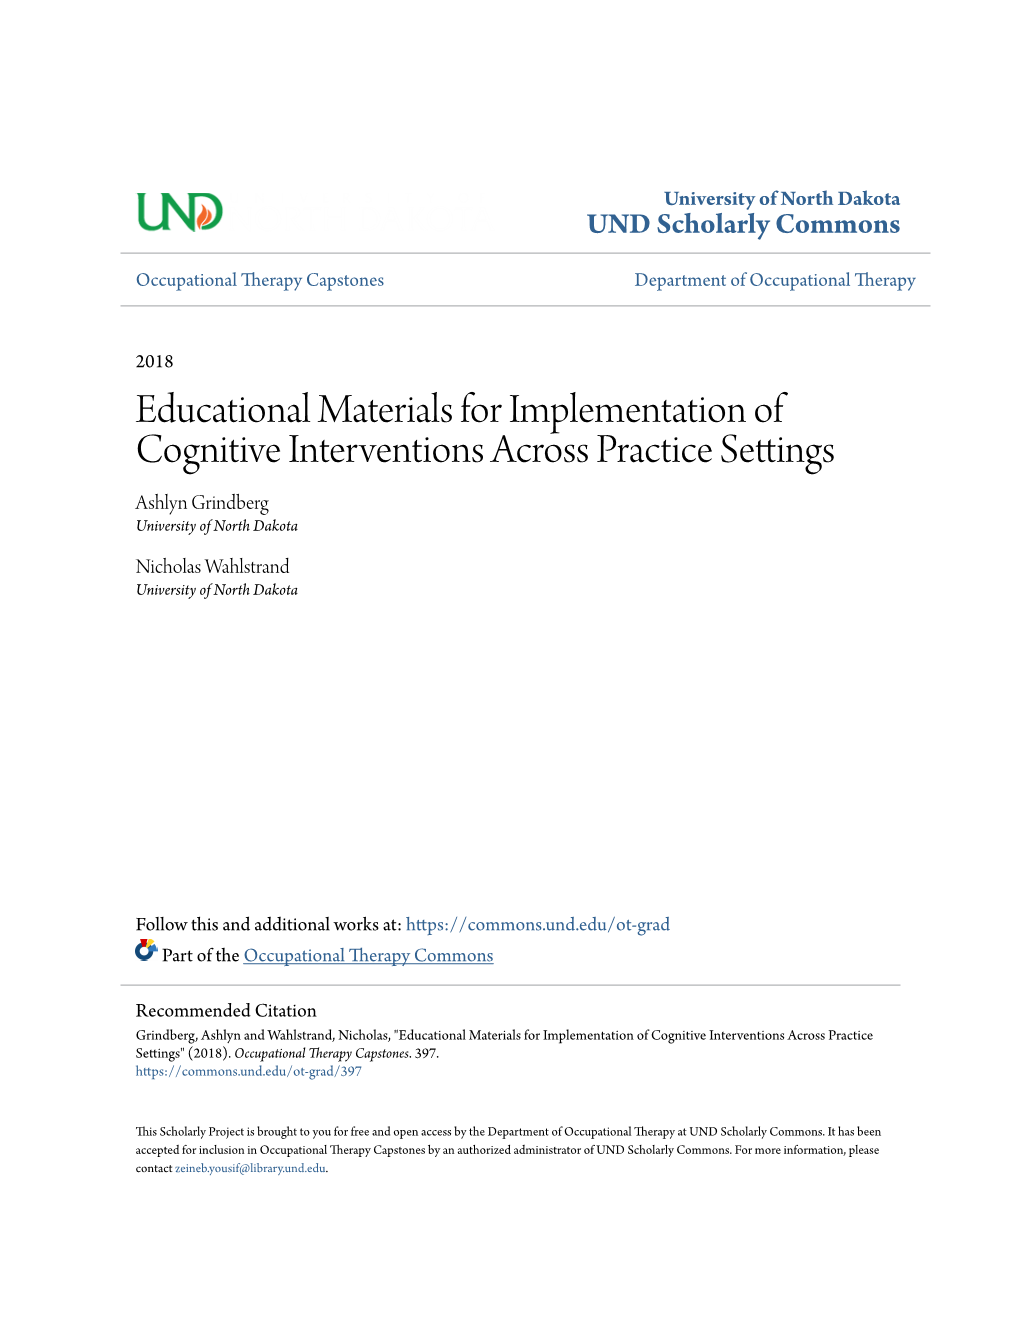 Educational Materials for Implementation of Cognitive Interventions Across Practice Settings Ashlyn Grindberg University of North Dakota